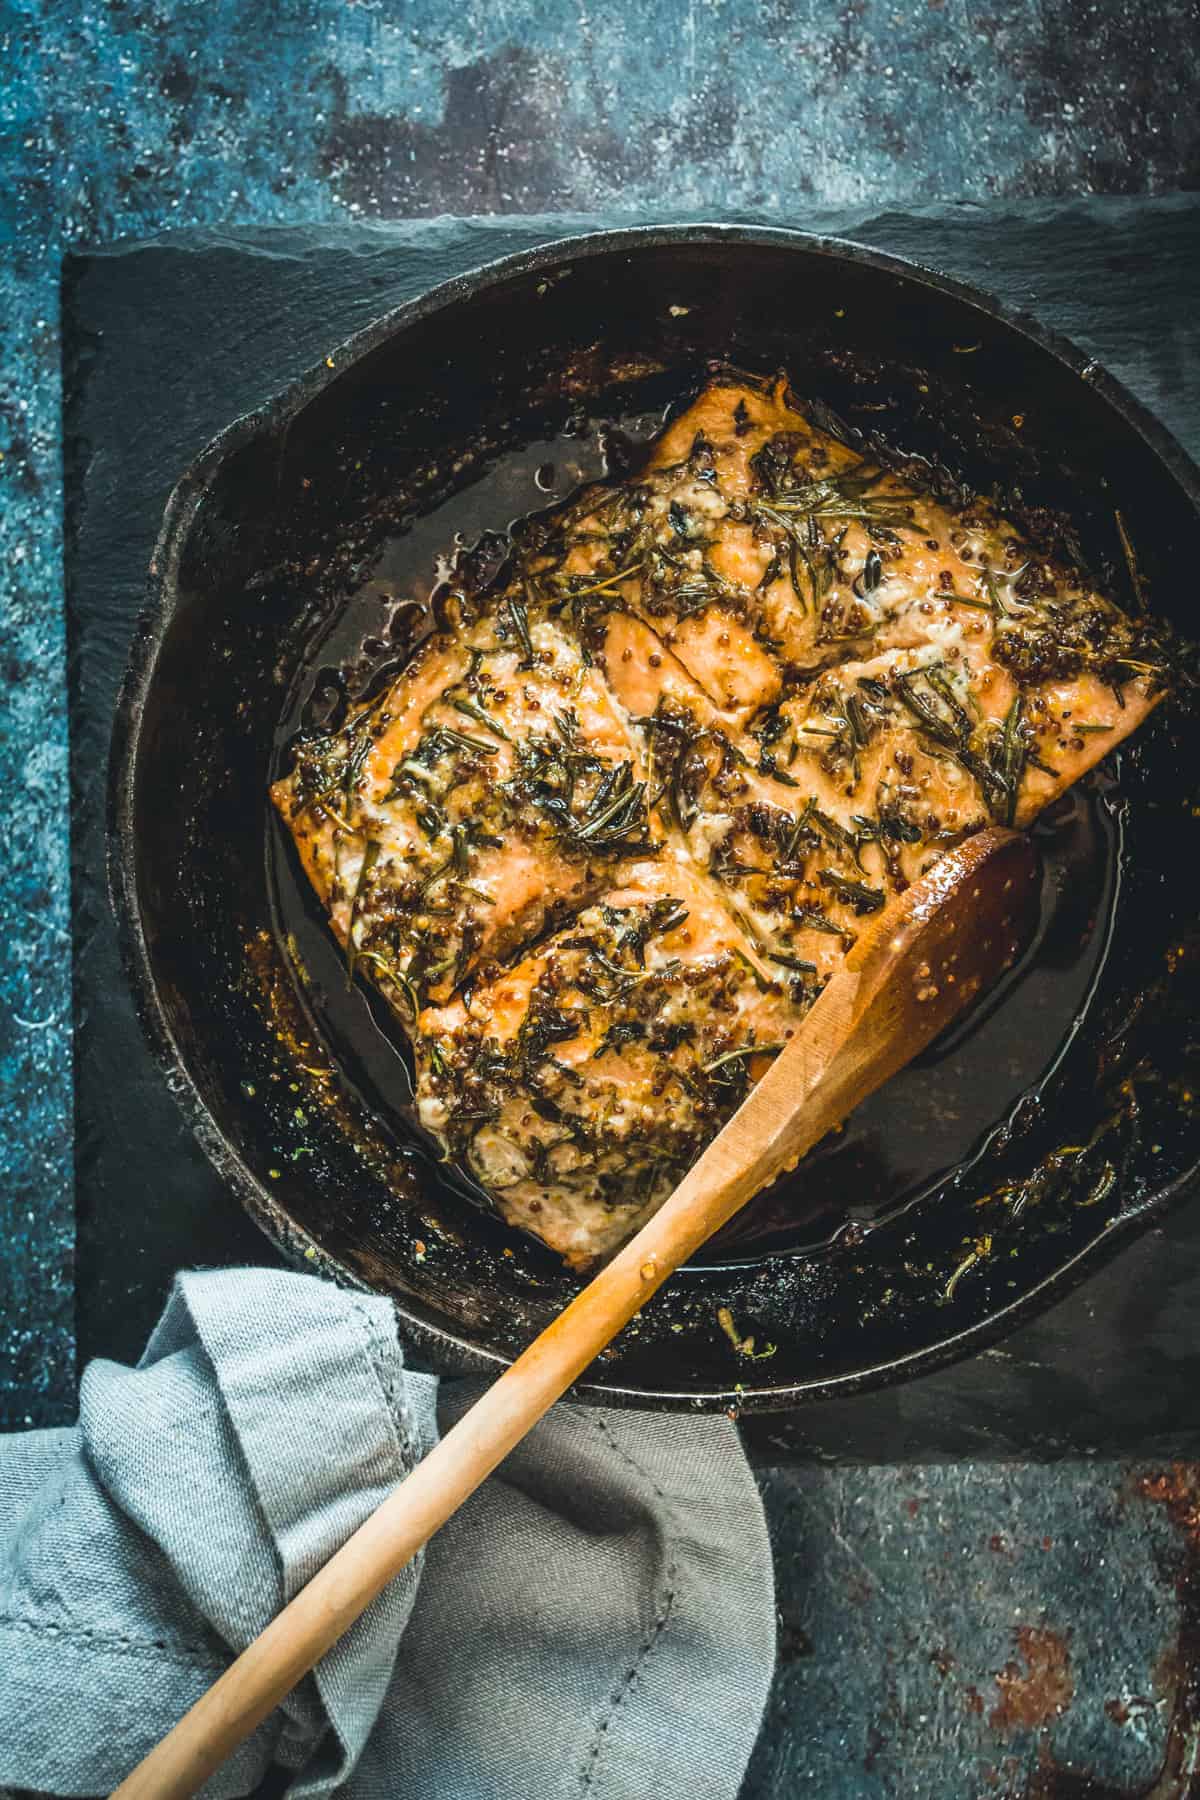 https://immigrantstable.com/wp-content/uploads/2020/09/Cast-iron-pan-fried-Sockeye-salmon-recipe-with-mustard-honey-and-wild-herbs-25.jpg